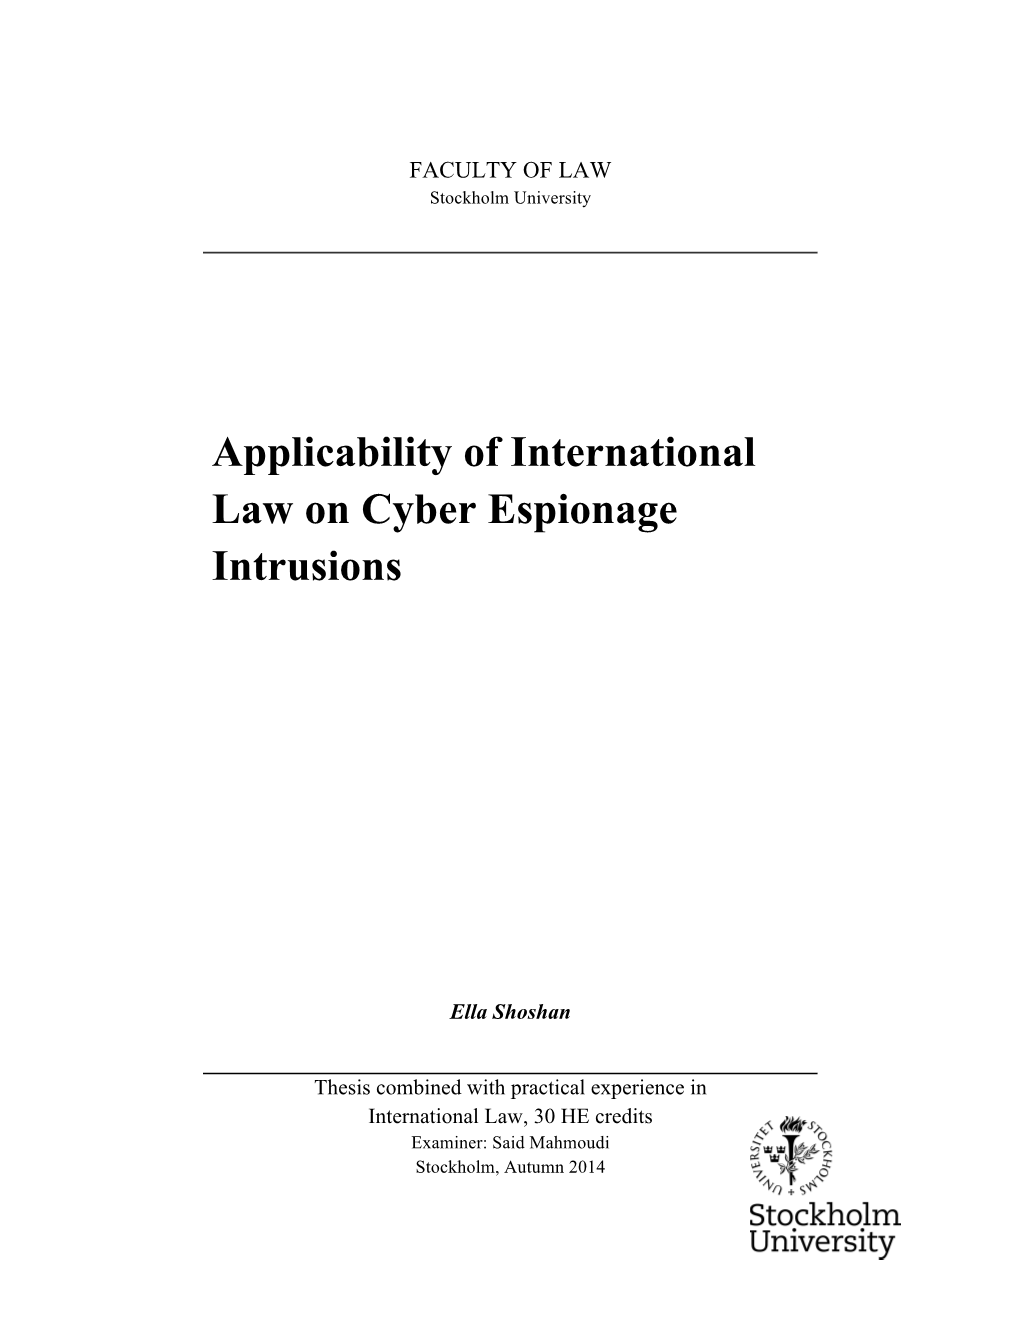 Applicability of International Law on Cyber Espionage Intrusions